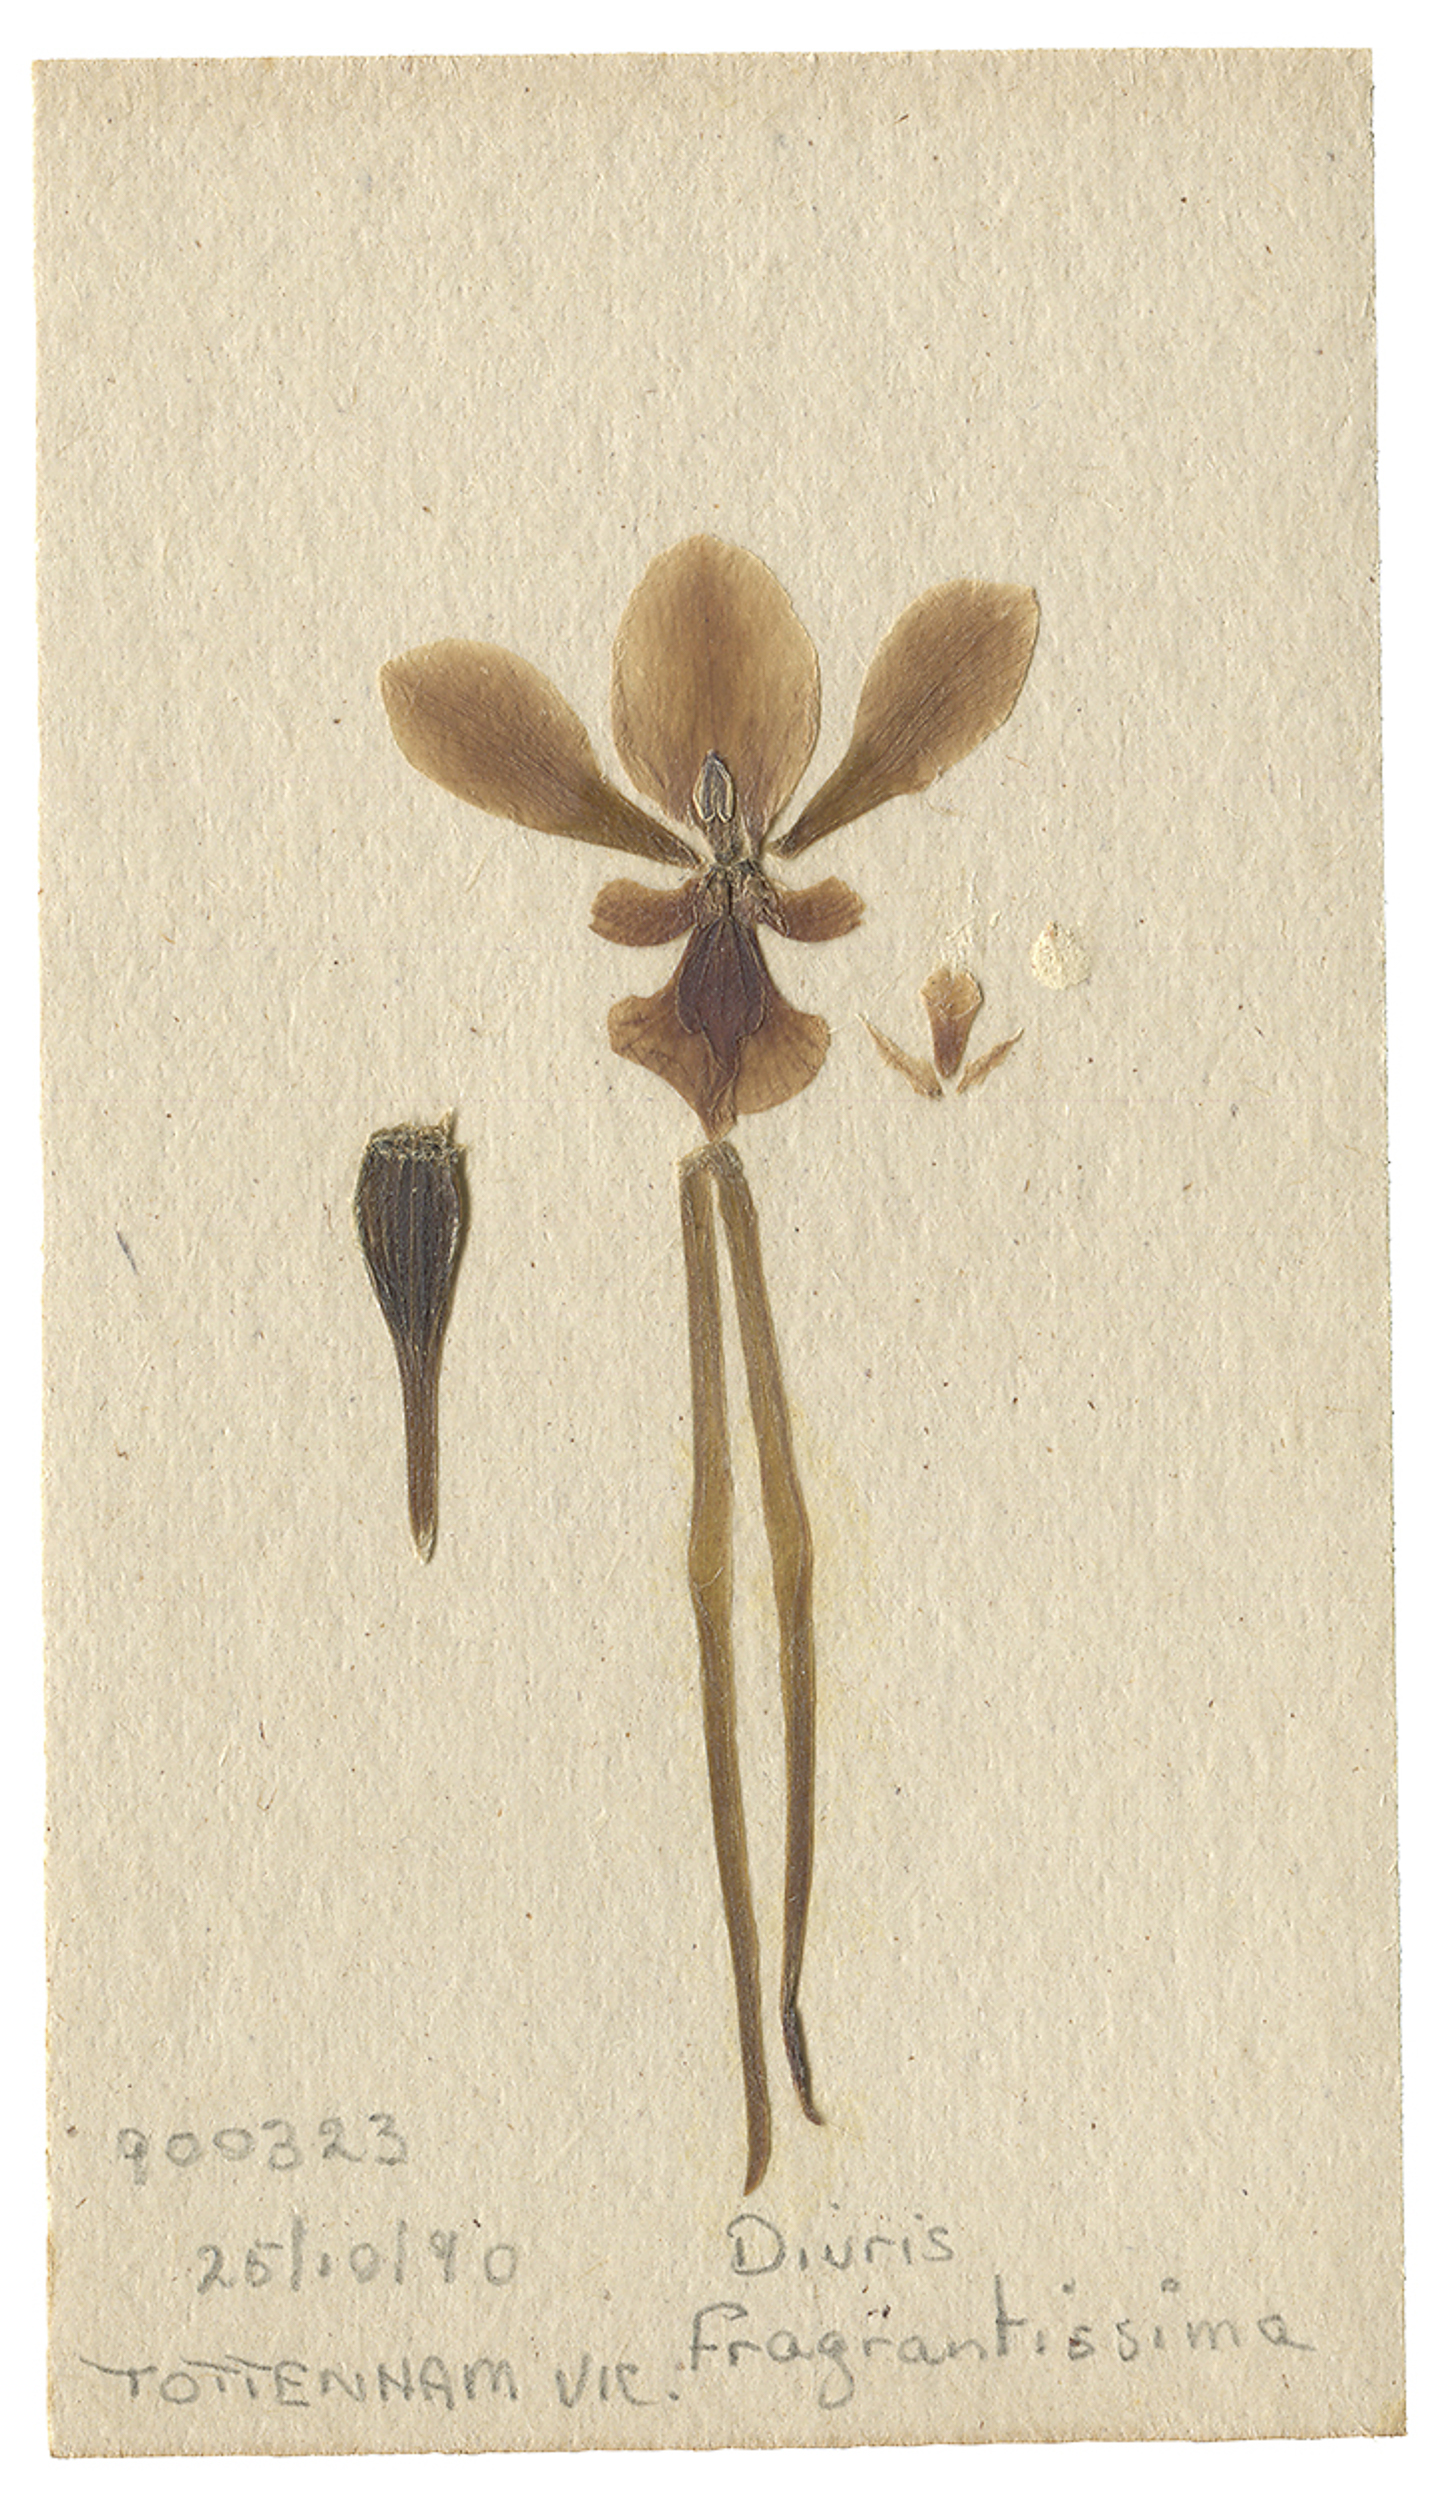 LYON 2017-06-24 Phils Orchid Specimens 160_B.jpg